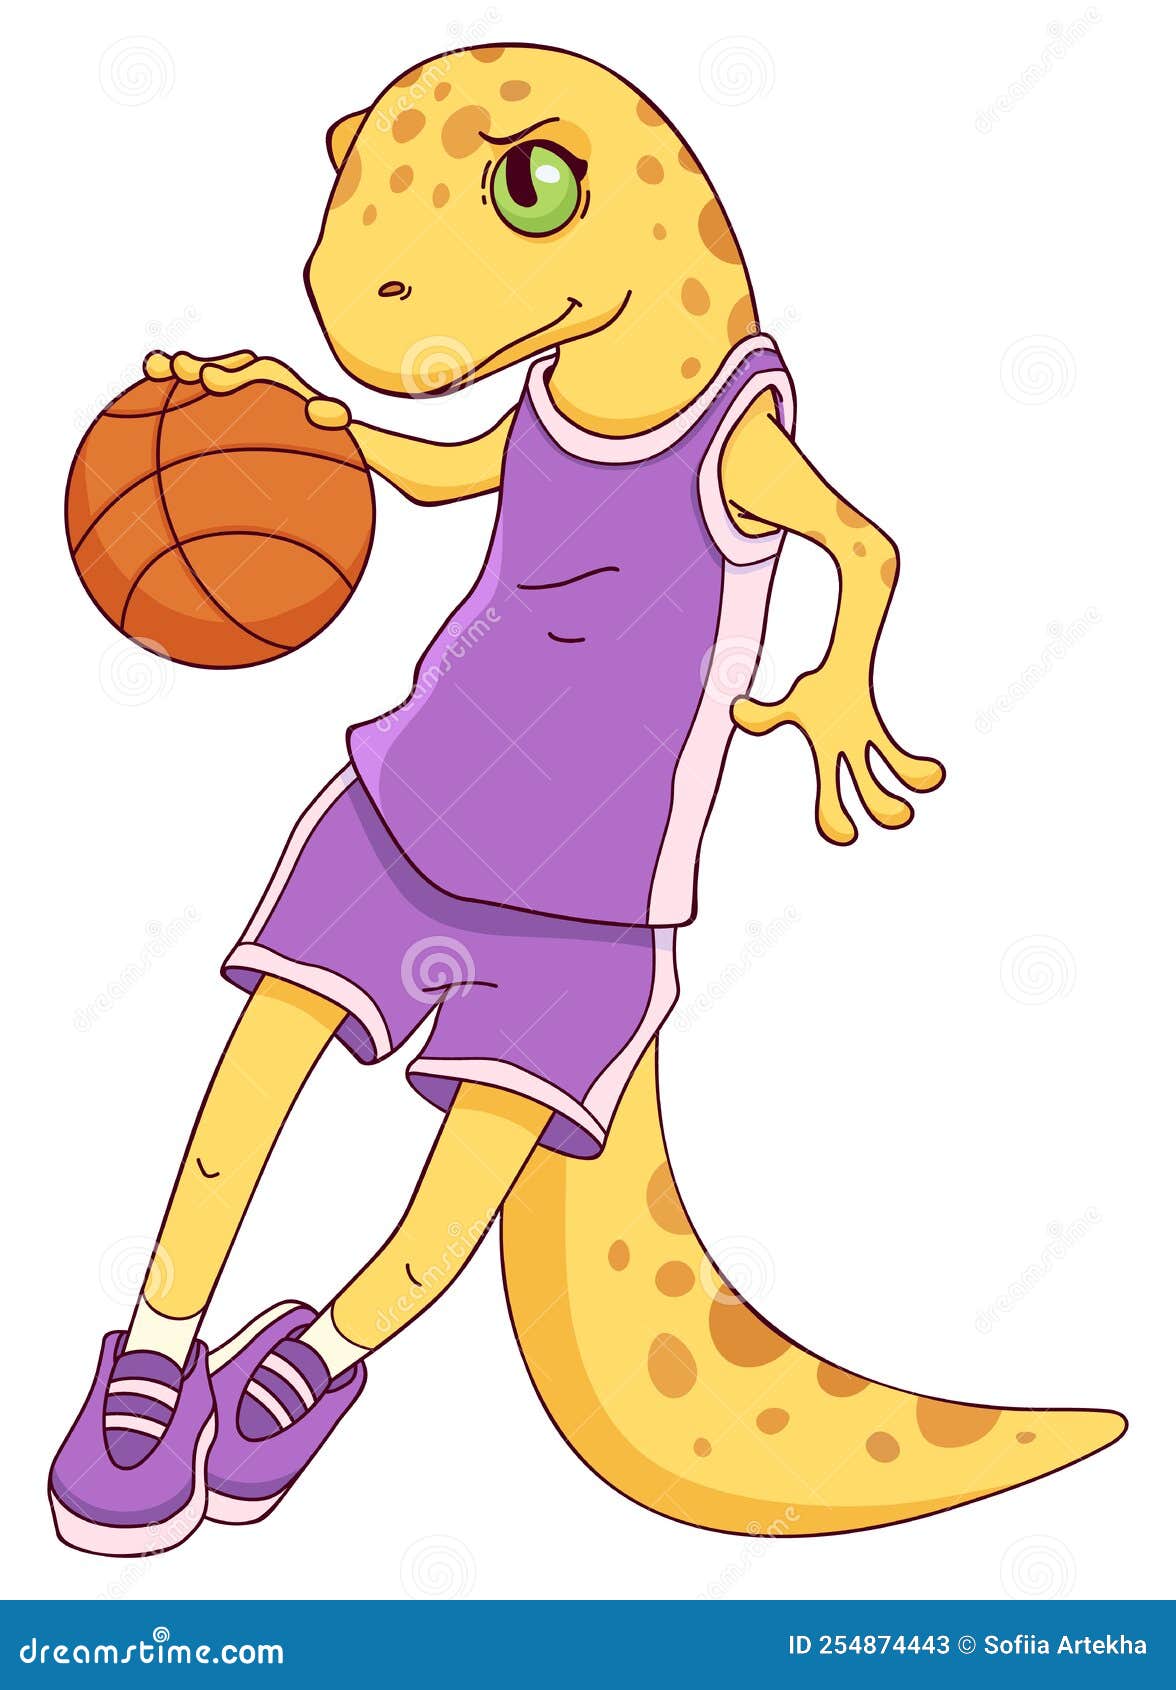 Cute basketball player cartoon character Vector Image